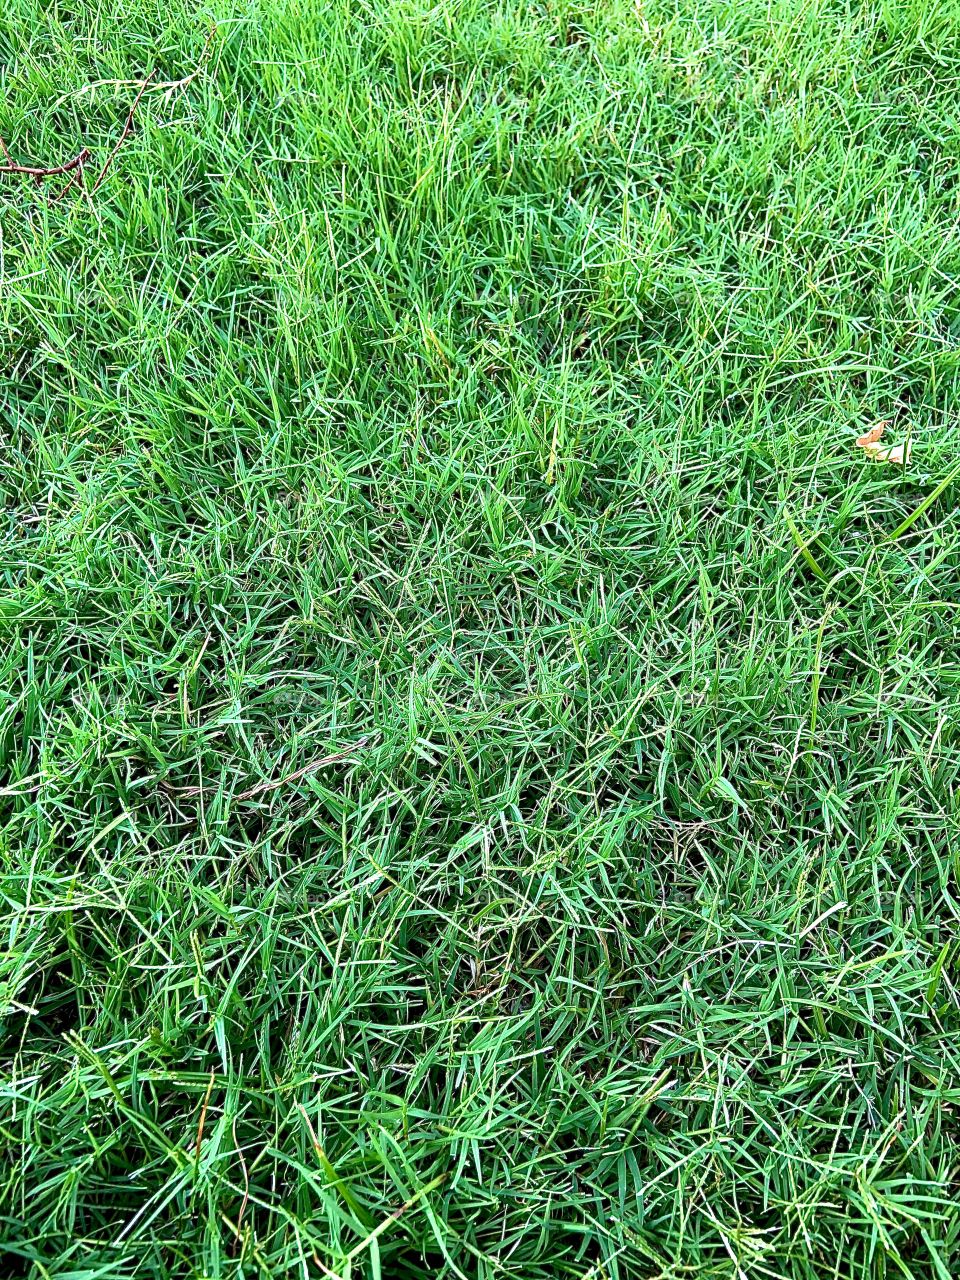 very green grass lawn in a backyard yard area